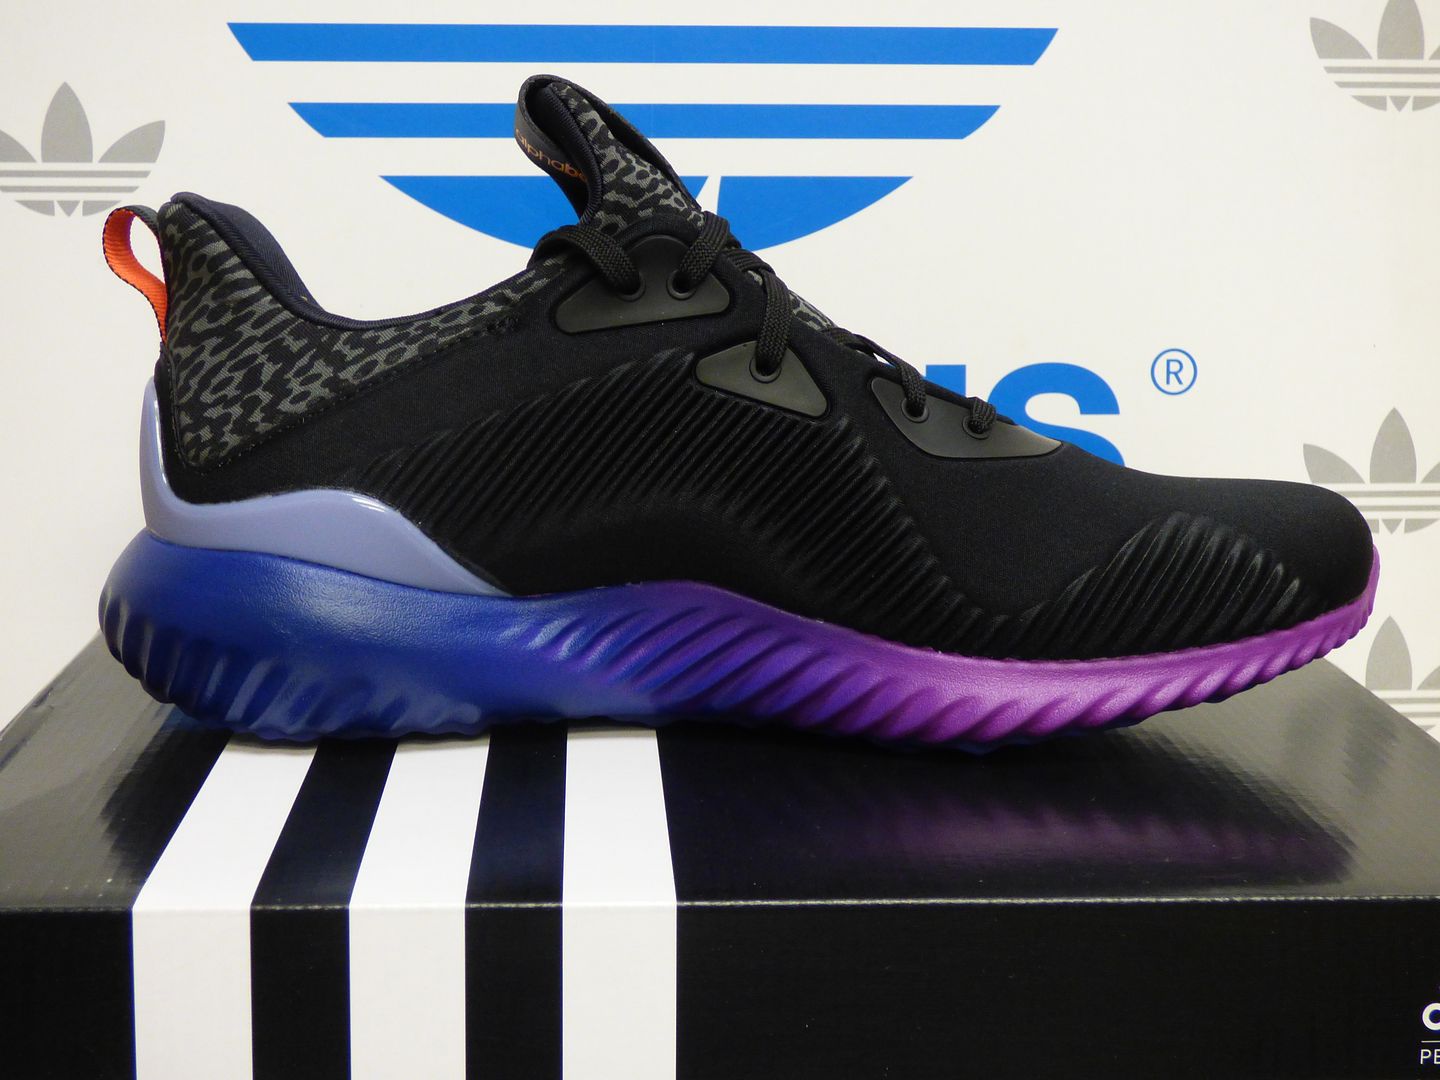 NEW ADIDAS Alphabounce Men's Running Shoes - Black/Purple; B42351 | eBay